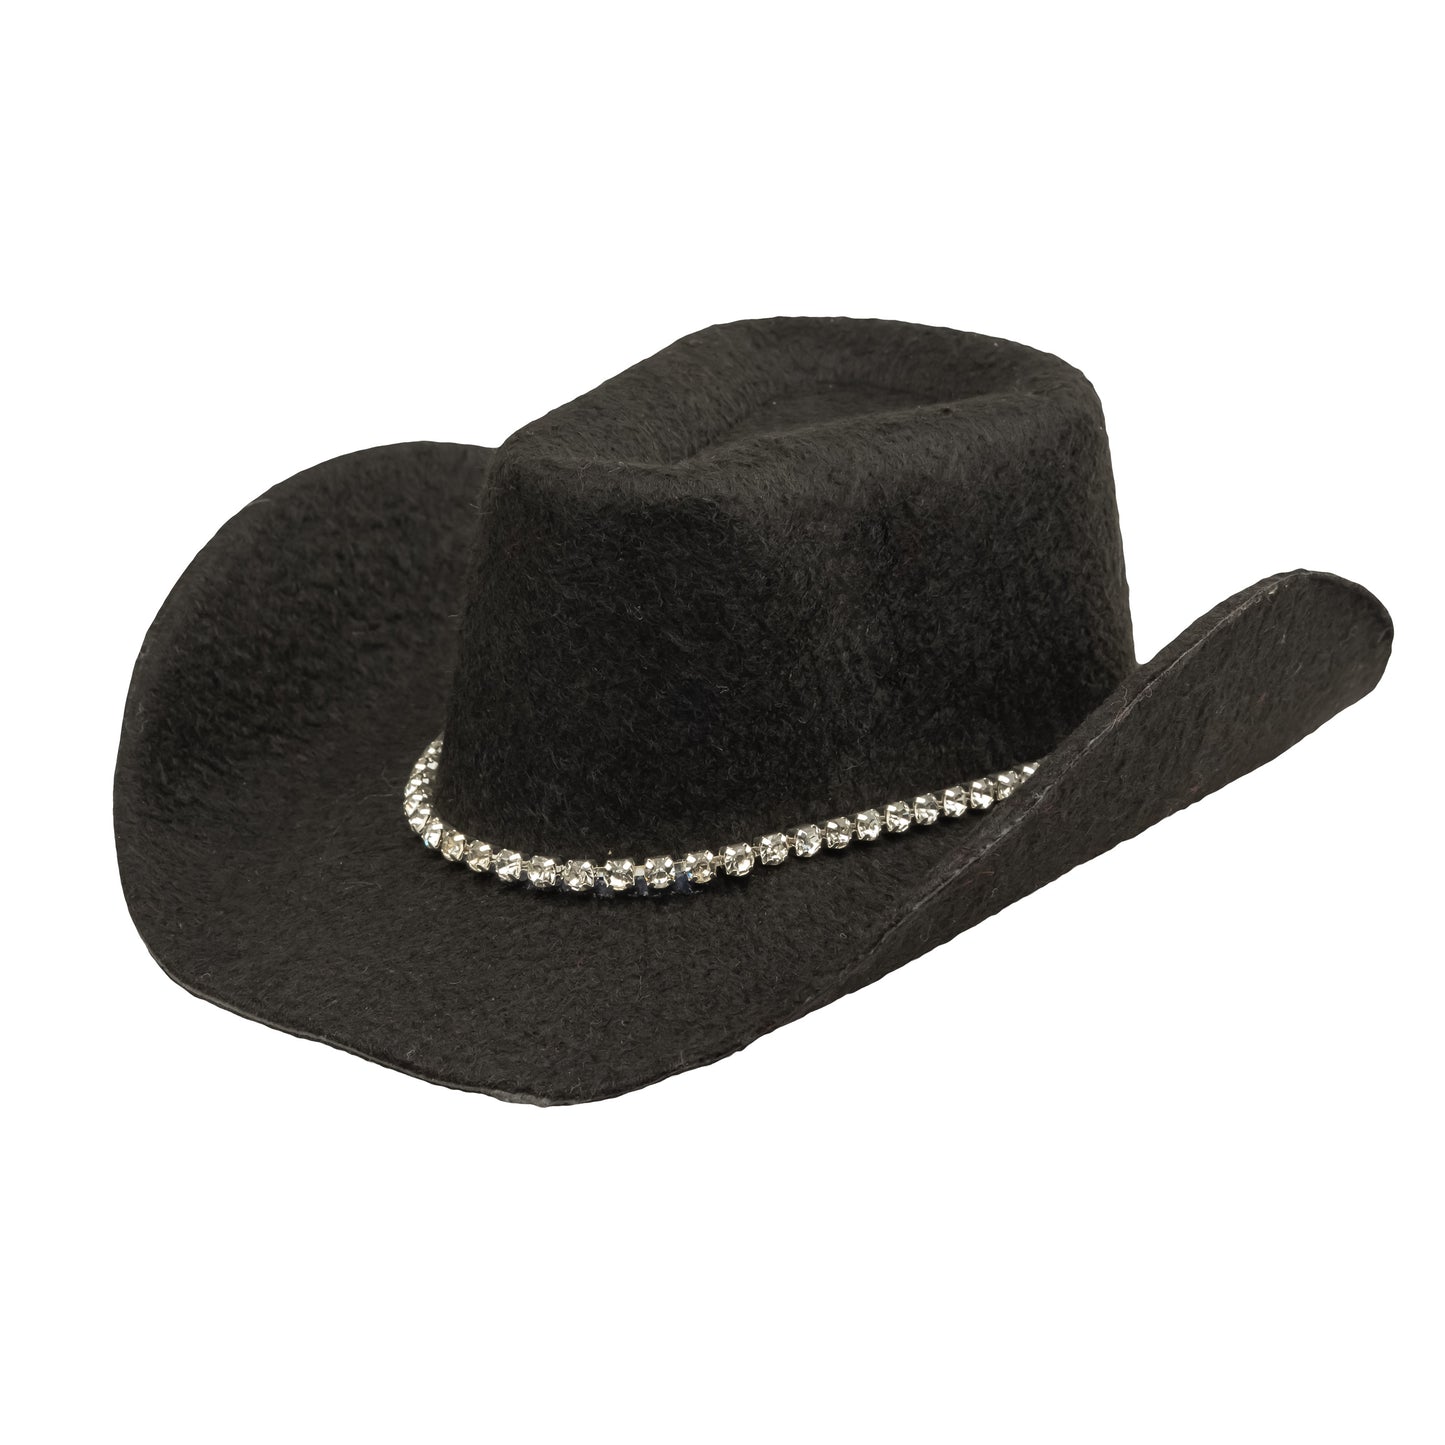 Black Rhinestone Trim Cowboy Hat for Pets